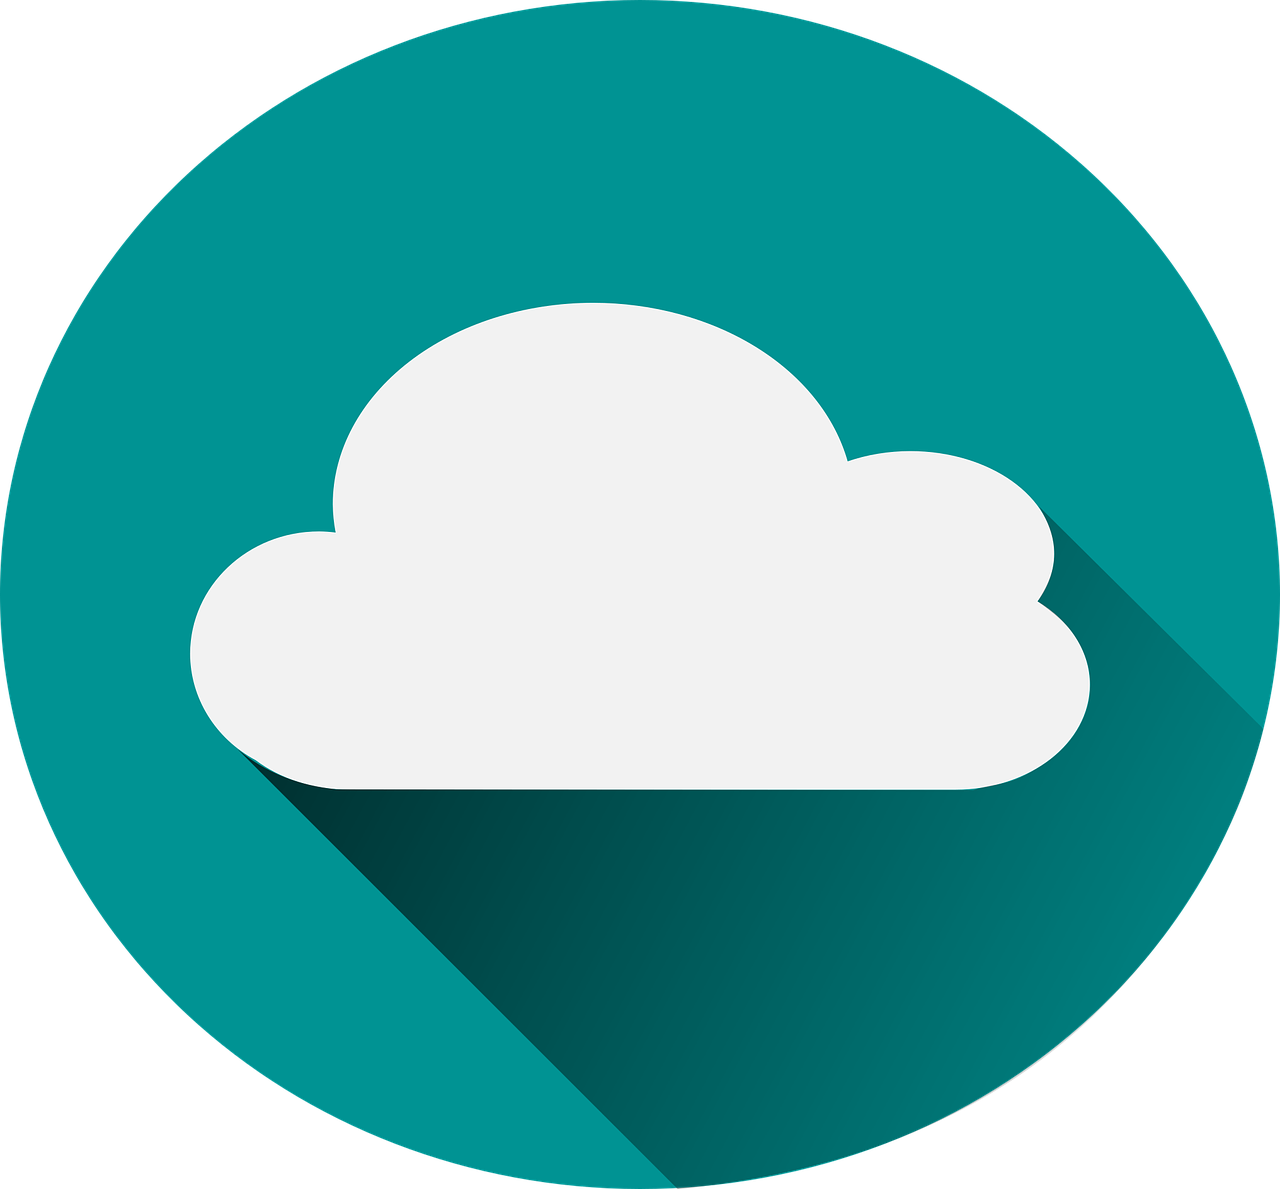 storage in the cloud logo miniature free photo